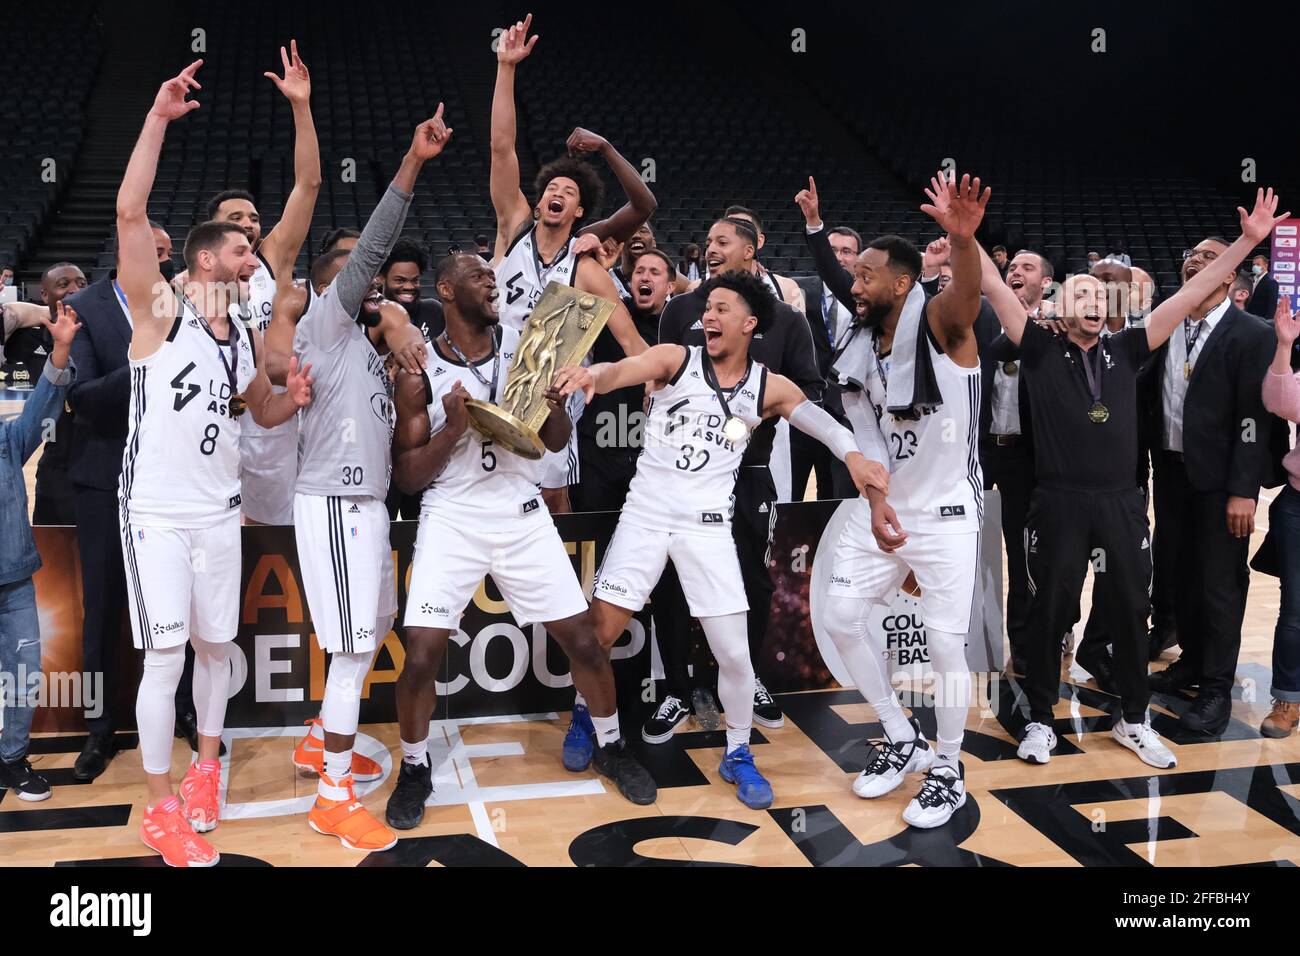 Levallois, Hauts de Seine, France. 24th Apr, 2021. Team of Lyon  Villeurbanne winner of the French Cup of Basketball between Dijon and  Lyon-Villeurbanne ASVEL LDLC (Tony Parker Team) at AccorHotels Arena  Stadium -